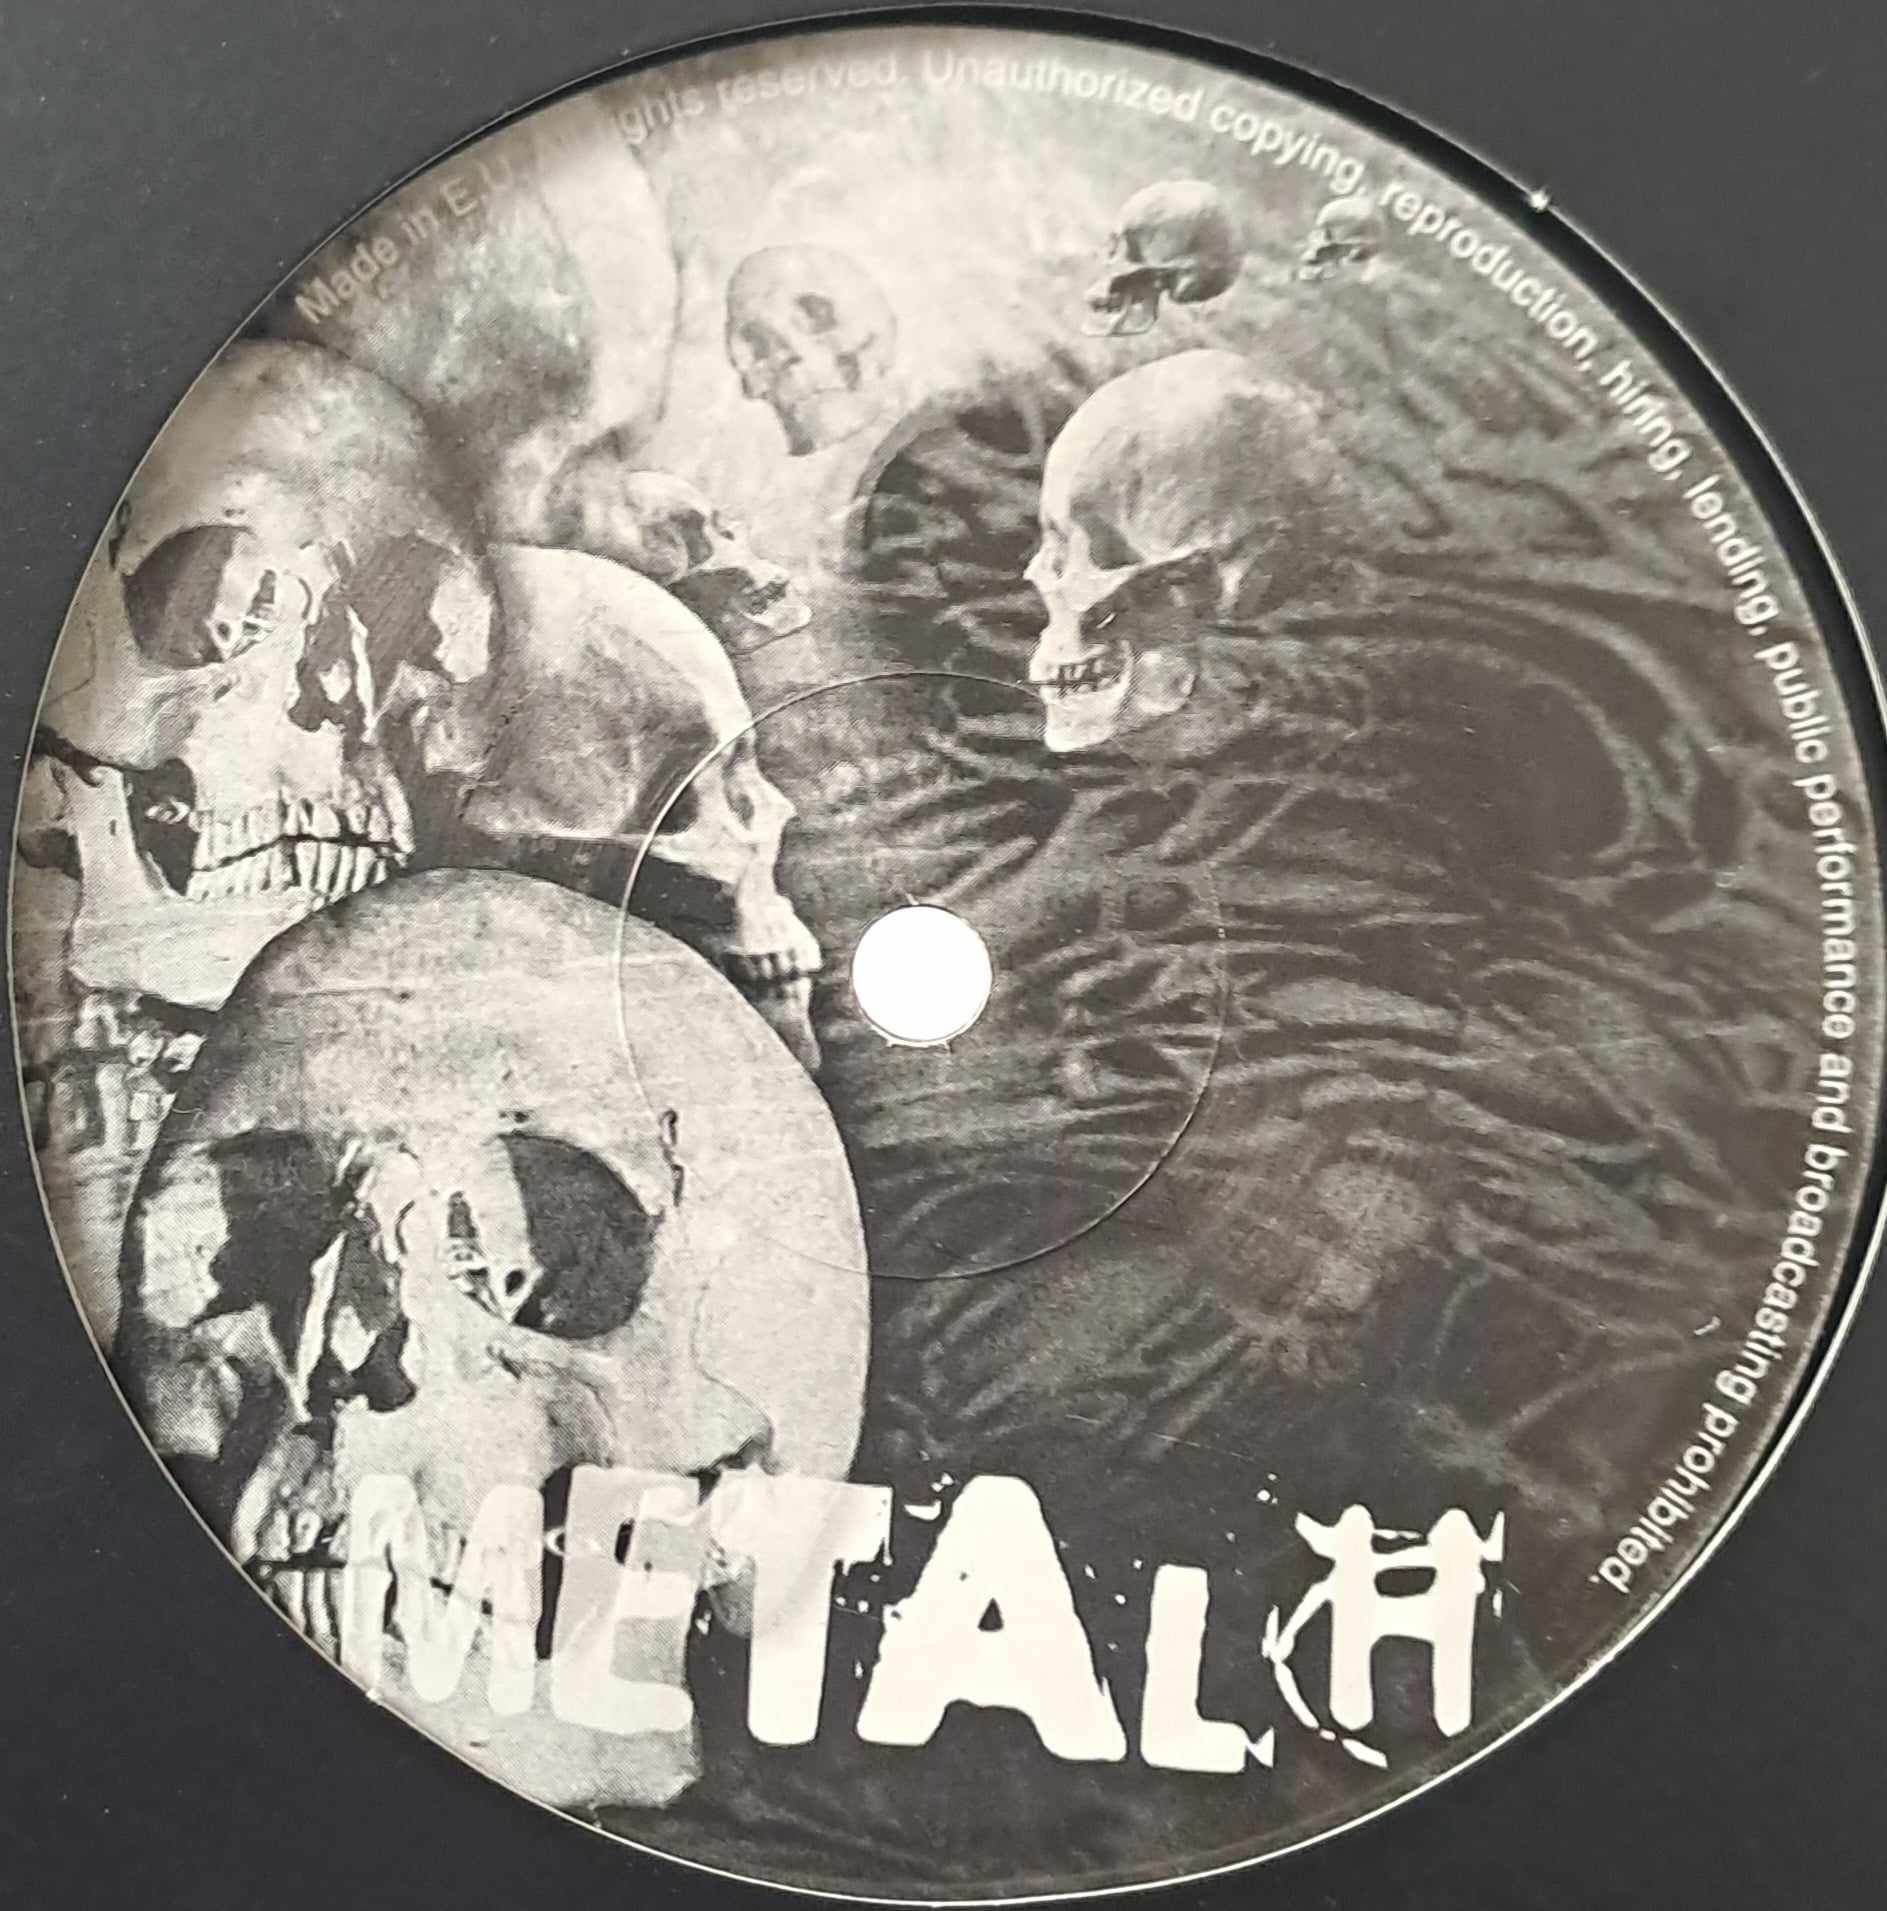 Metal H 01 - vinyle hardcore